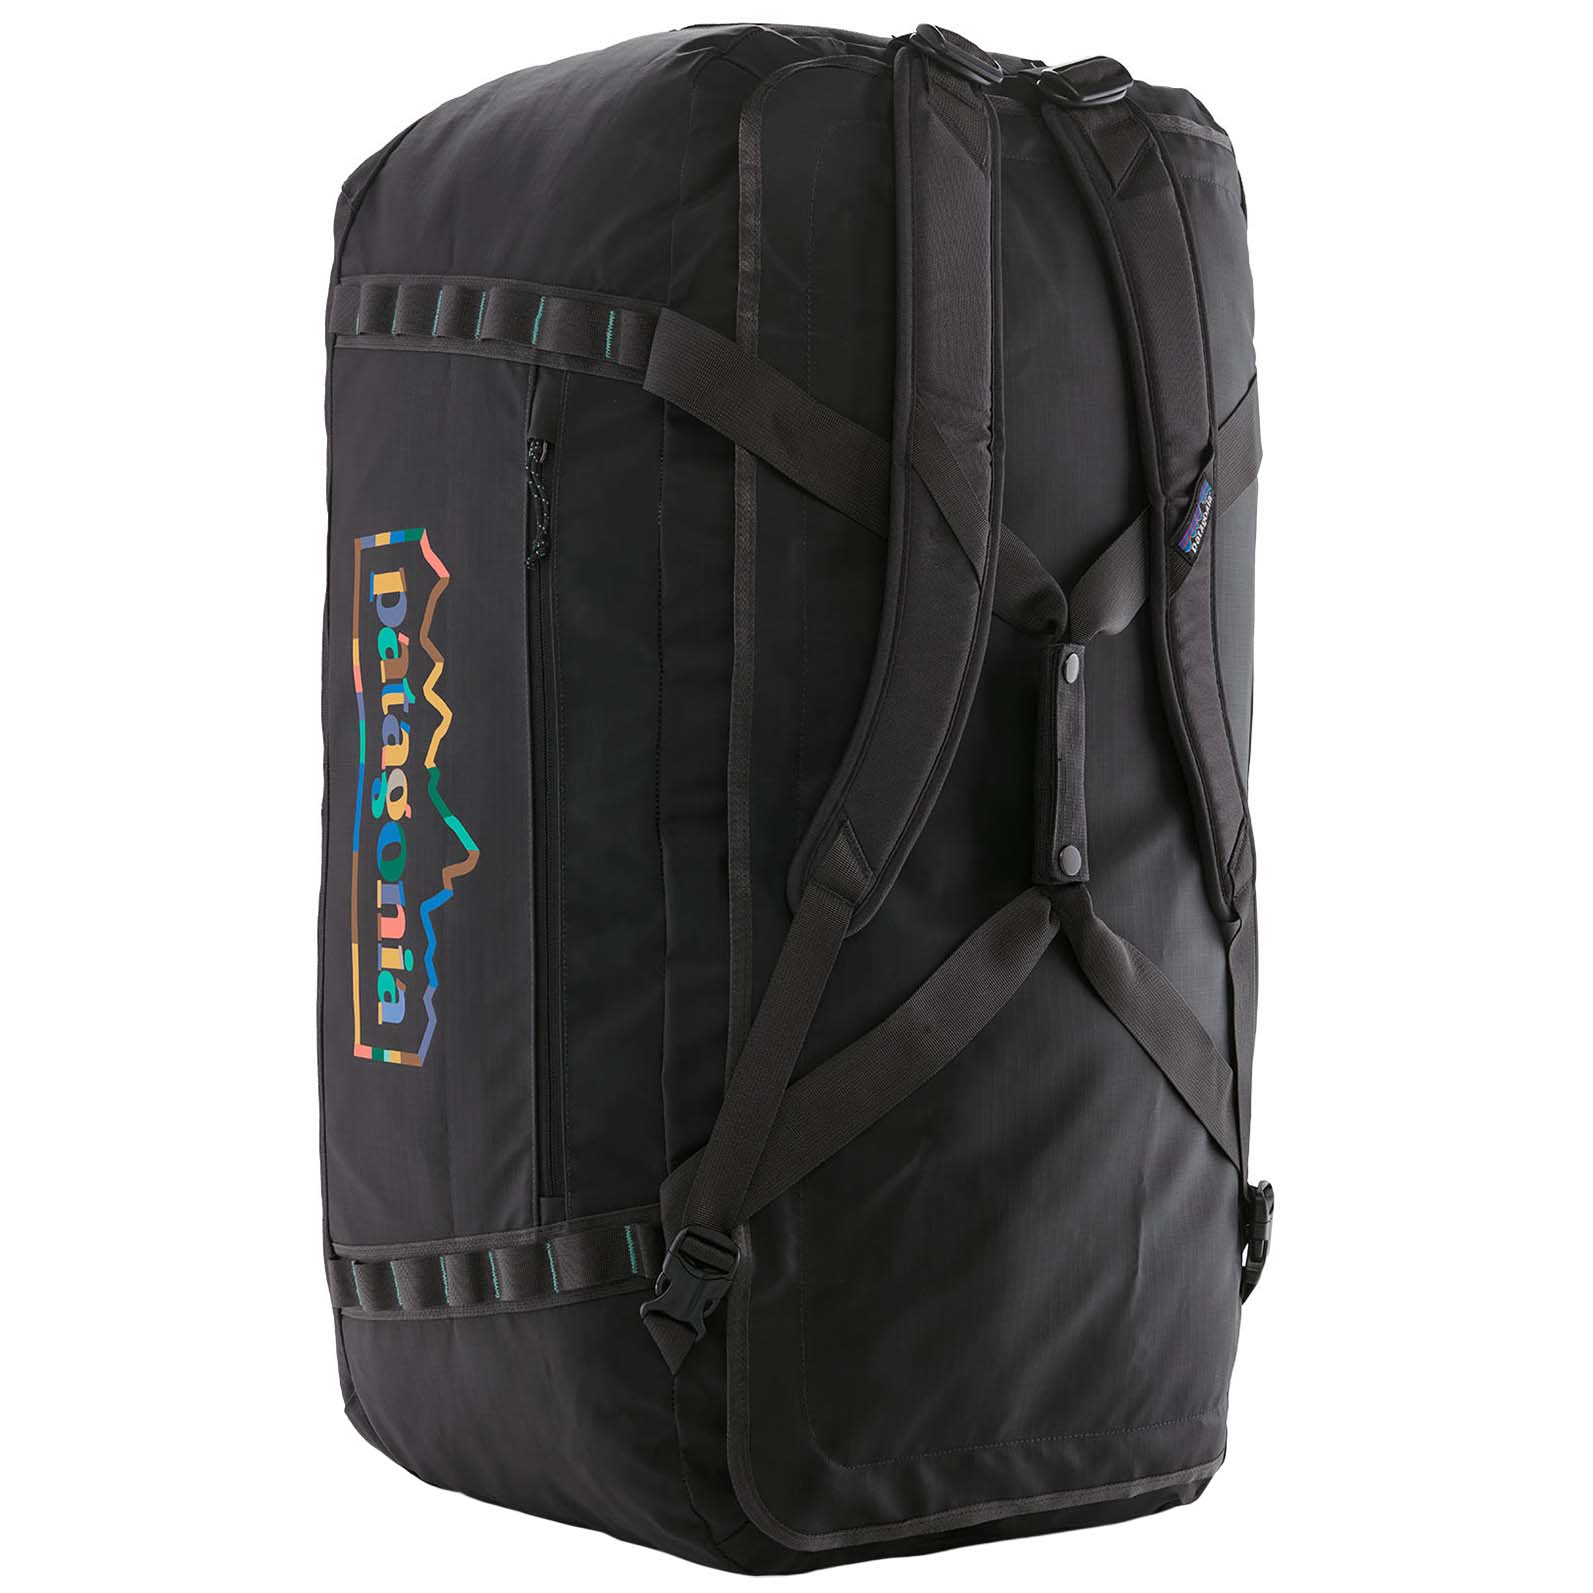 Patagonia Black Hole 100 Backpack & Duffel Bag